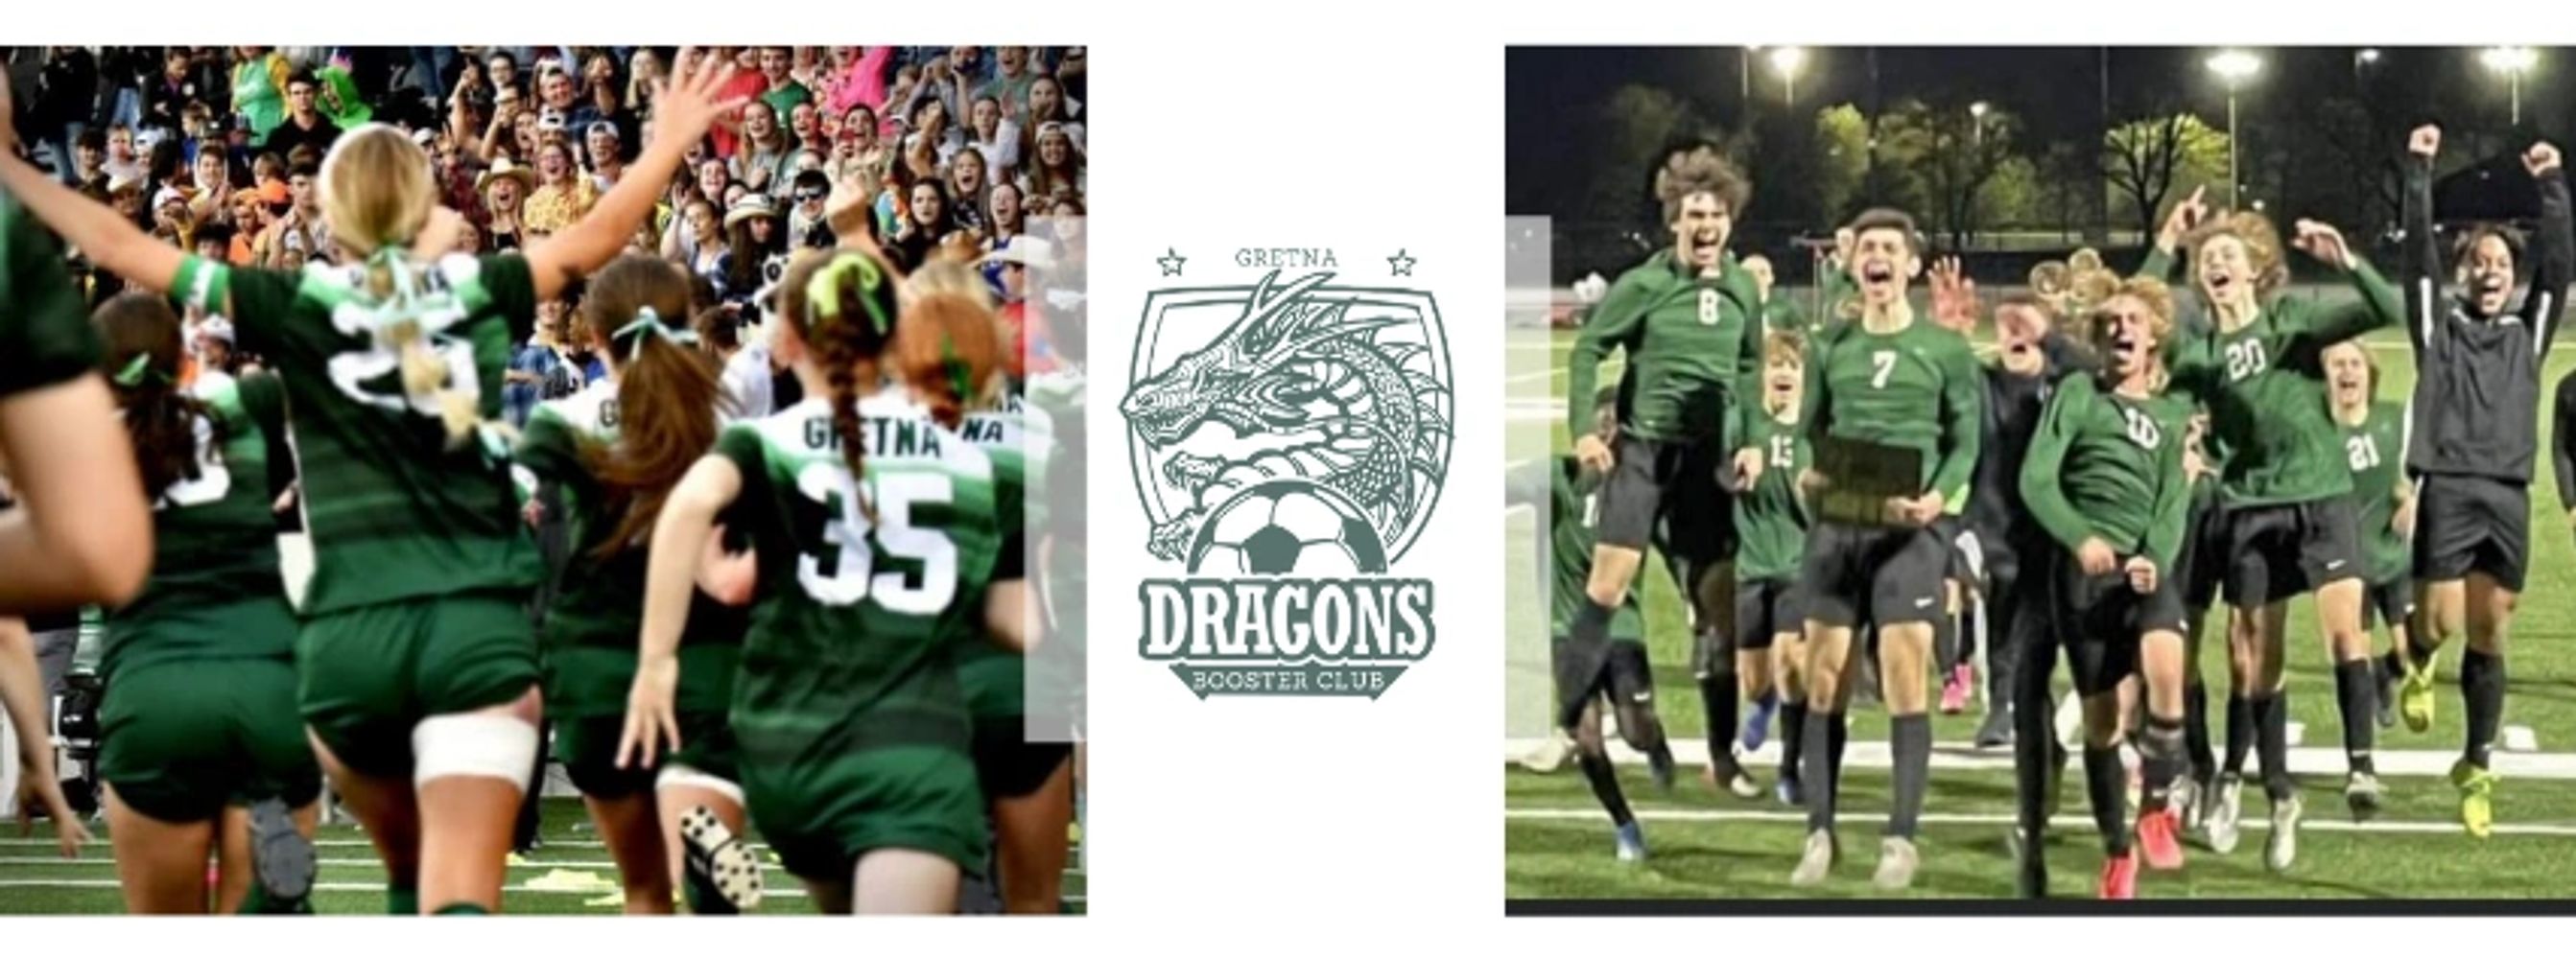 Dragon Soccer Booster Club